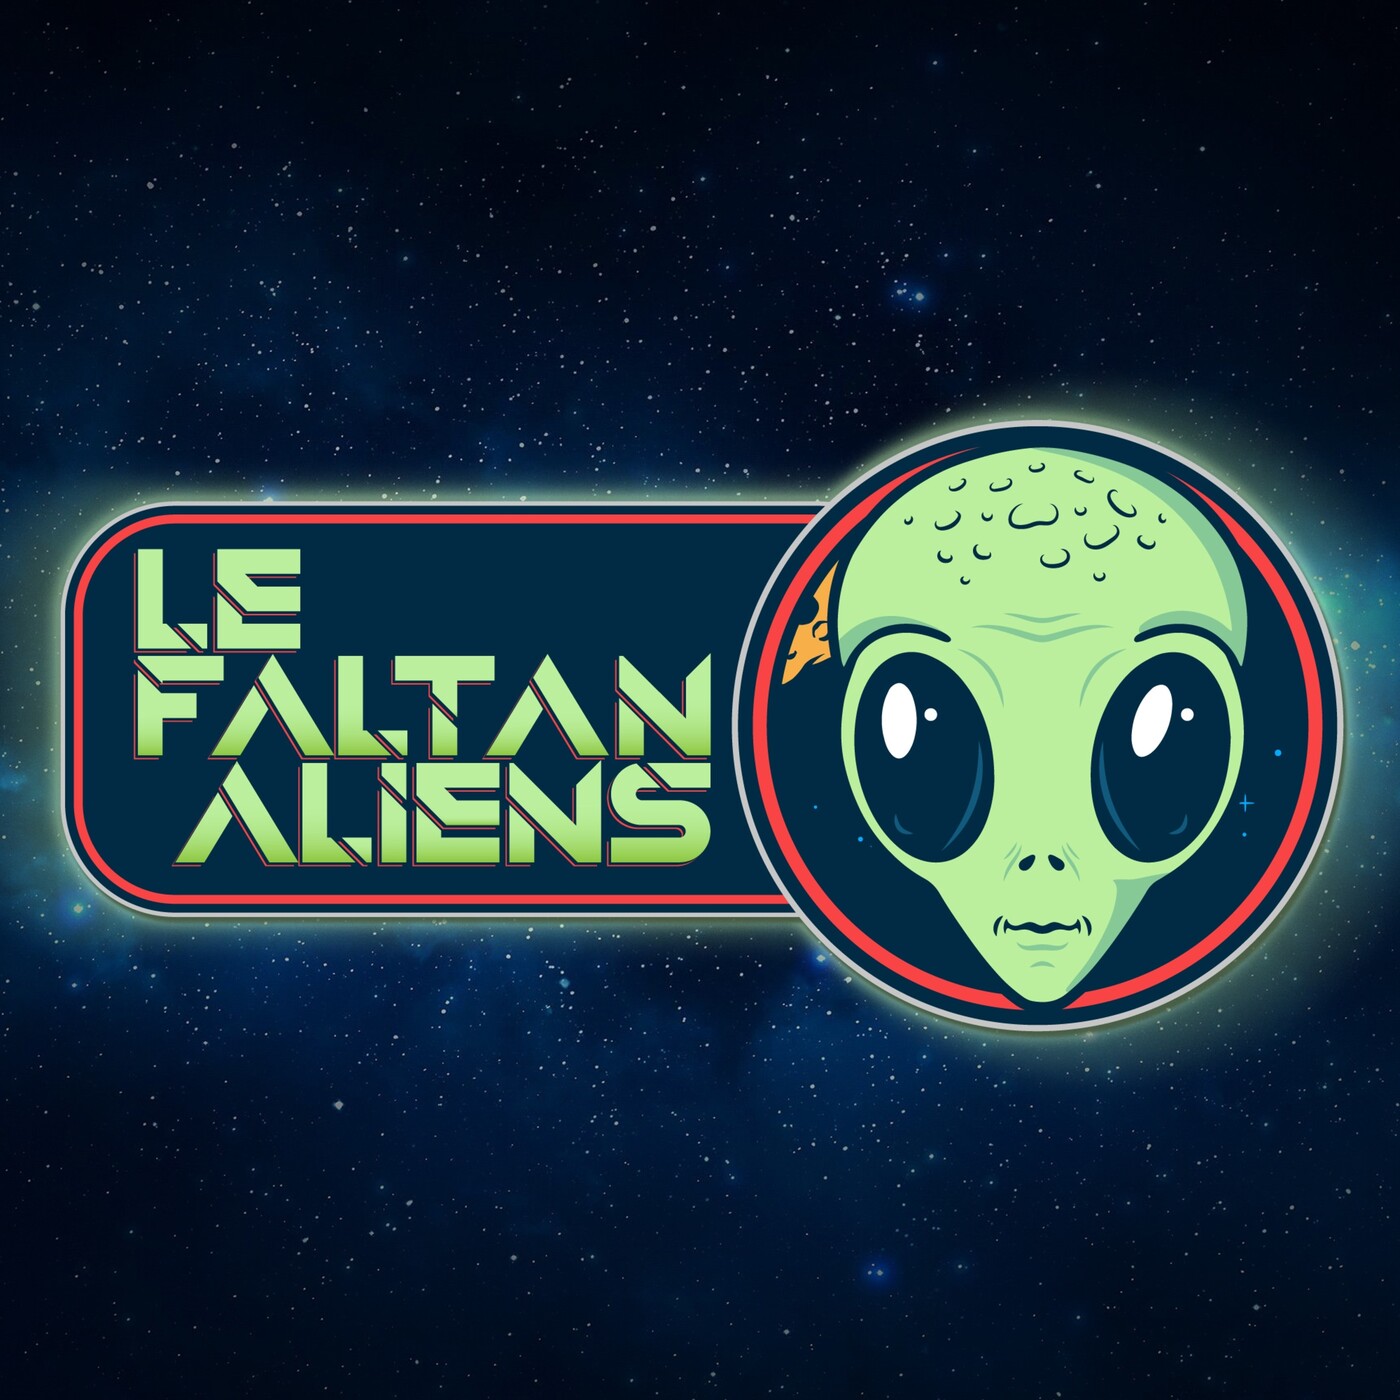 Le Faltan Aliens